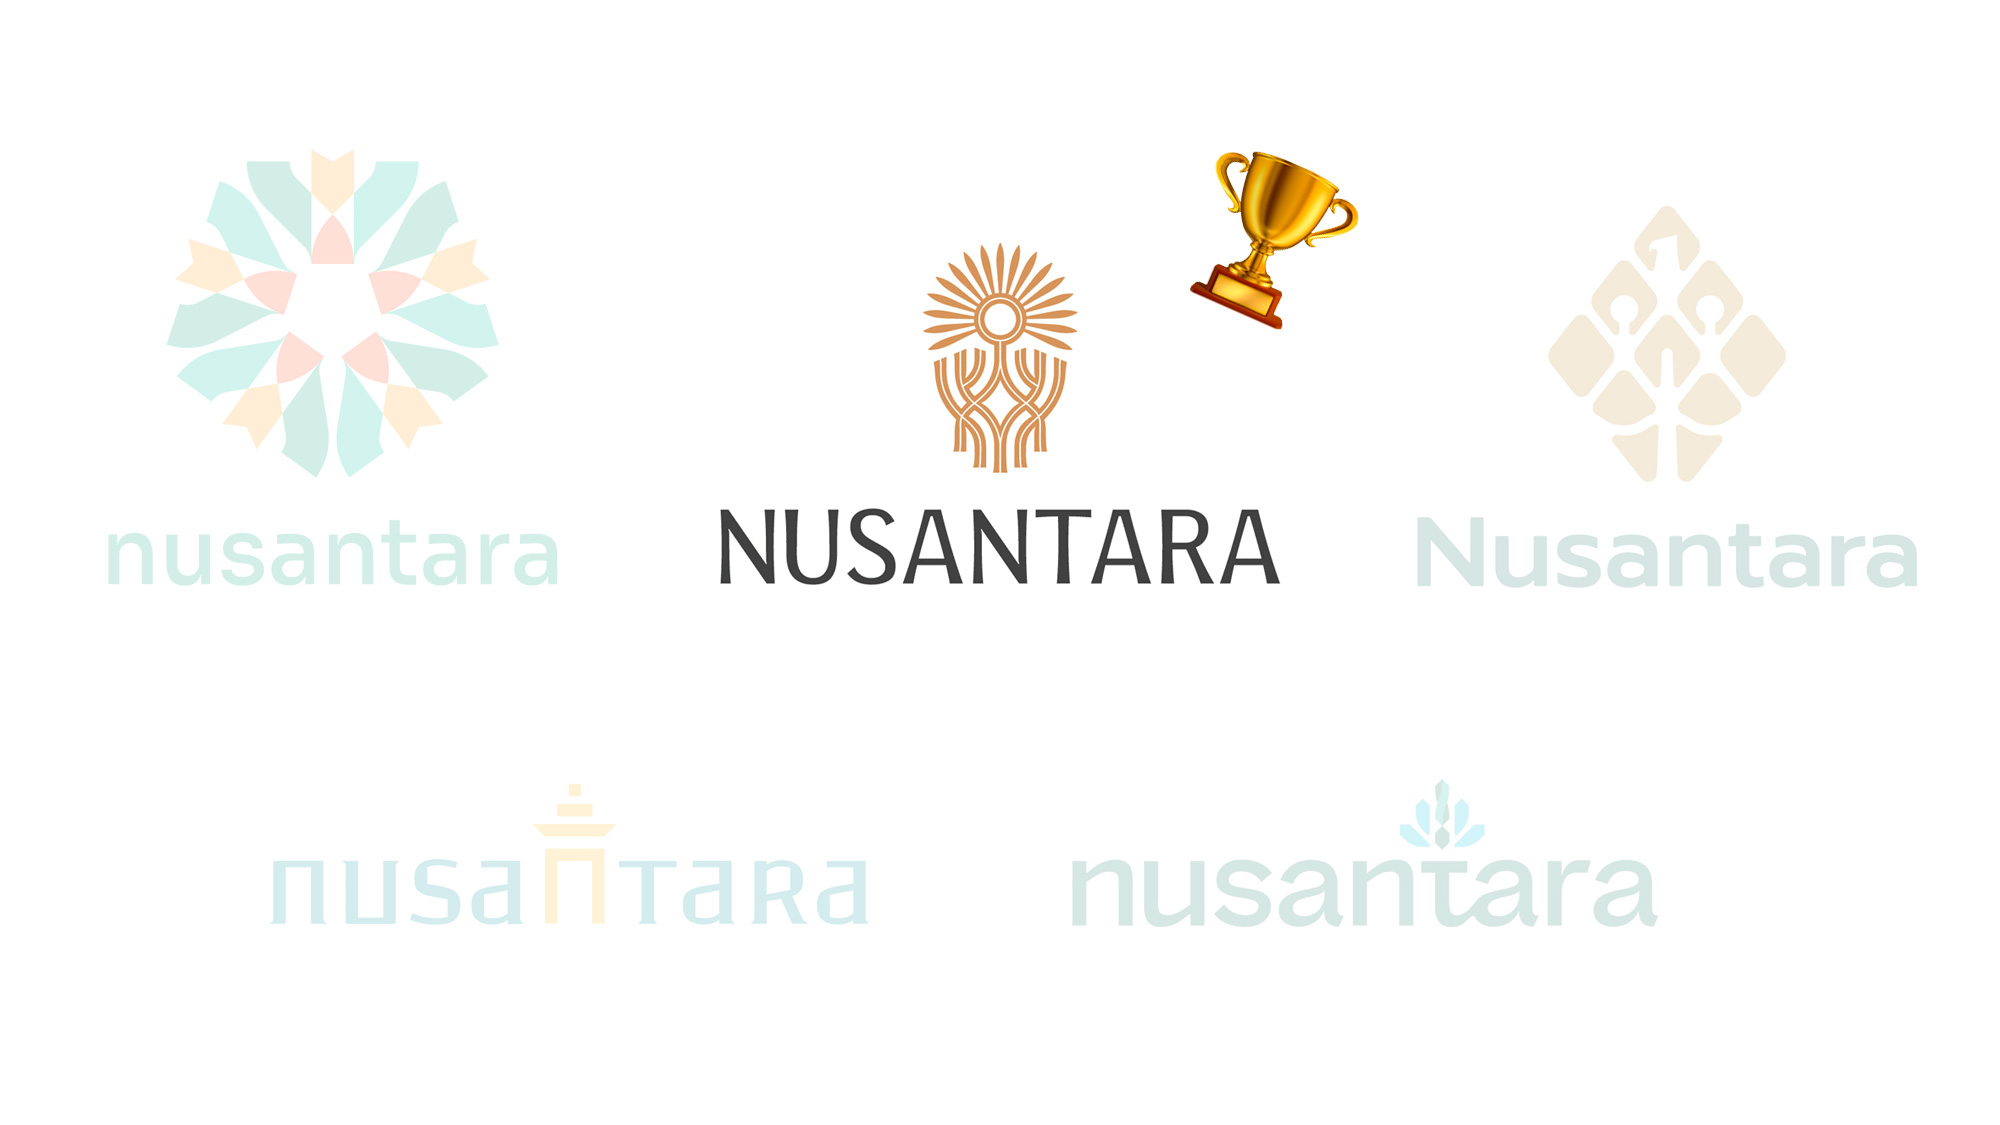 Nusantara’s Logo Selected